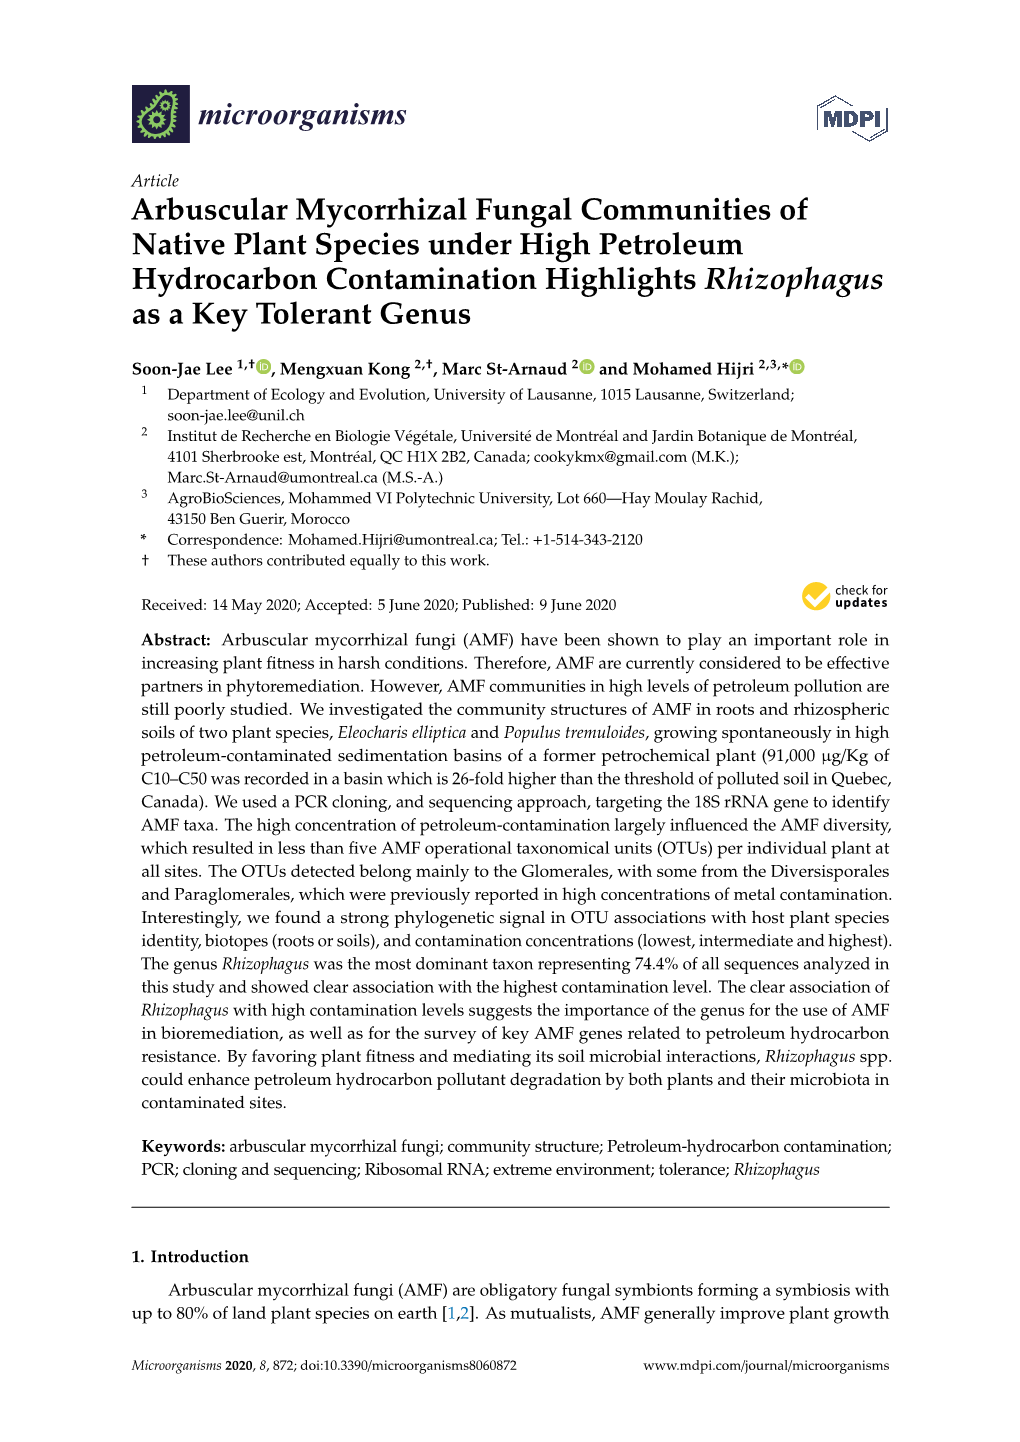 Arbuscular Mycorrhizal Fungal Communities of Native Plant Species Under High Petroleum Hydrocarbon Contamination Highlights Rhizophagus As a Key Tolerant Genus